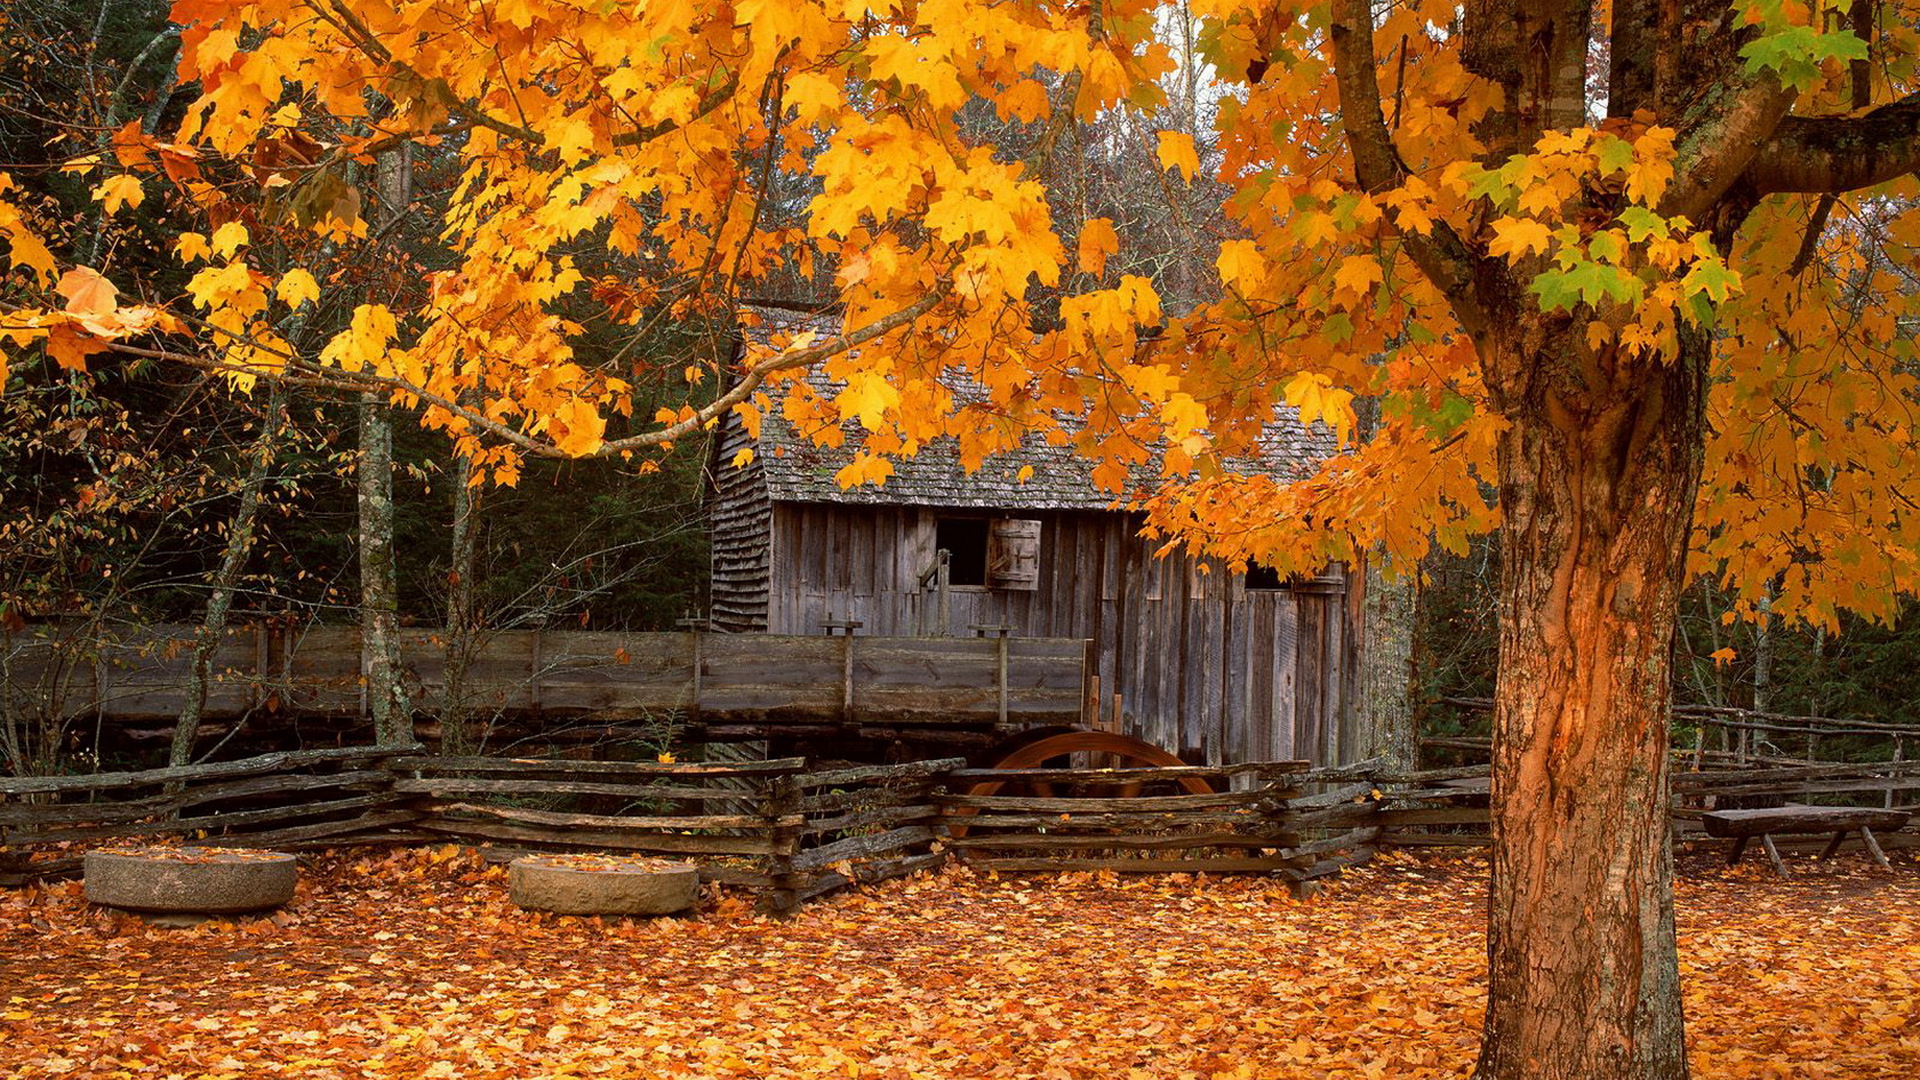 Autumn Backgrounds Desktop | Wallpapers, Backgrounds, Images, Art ...